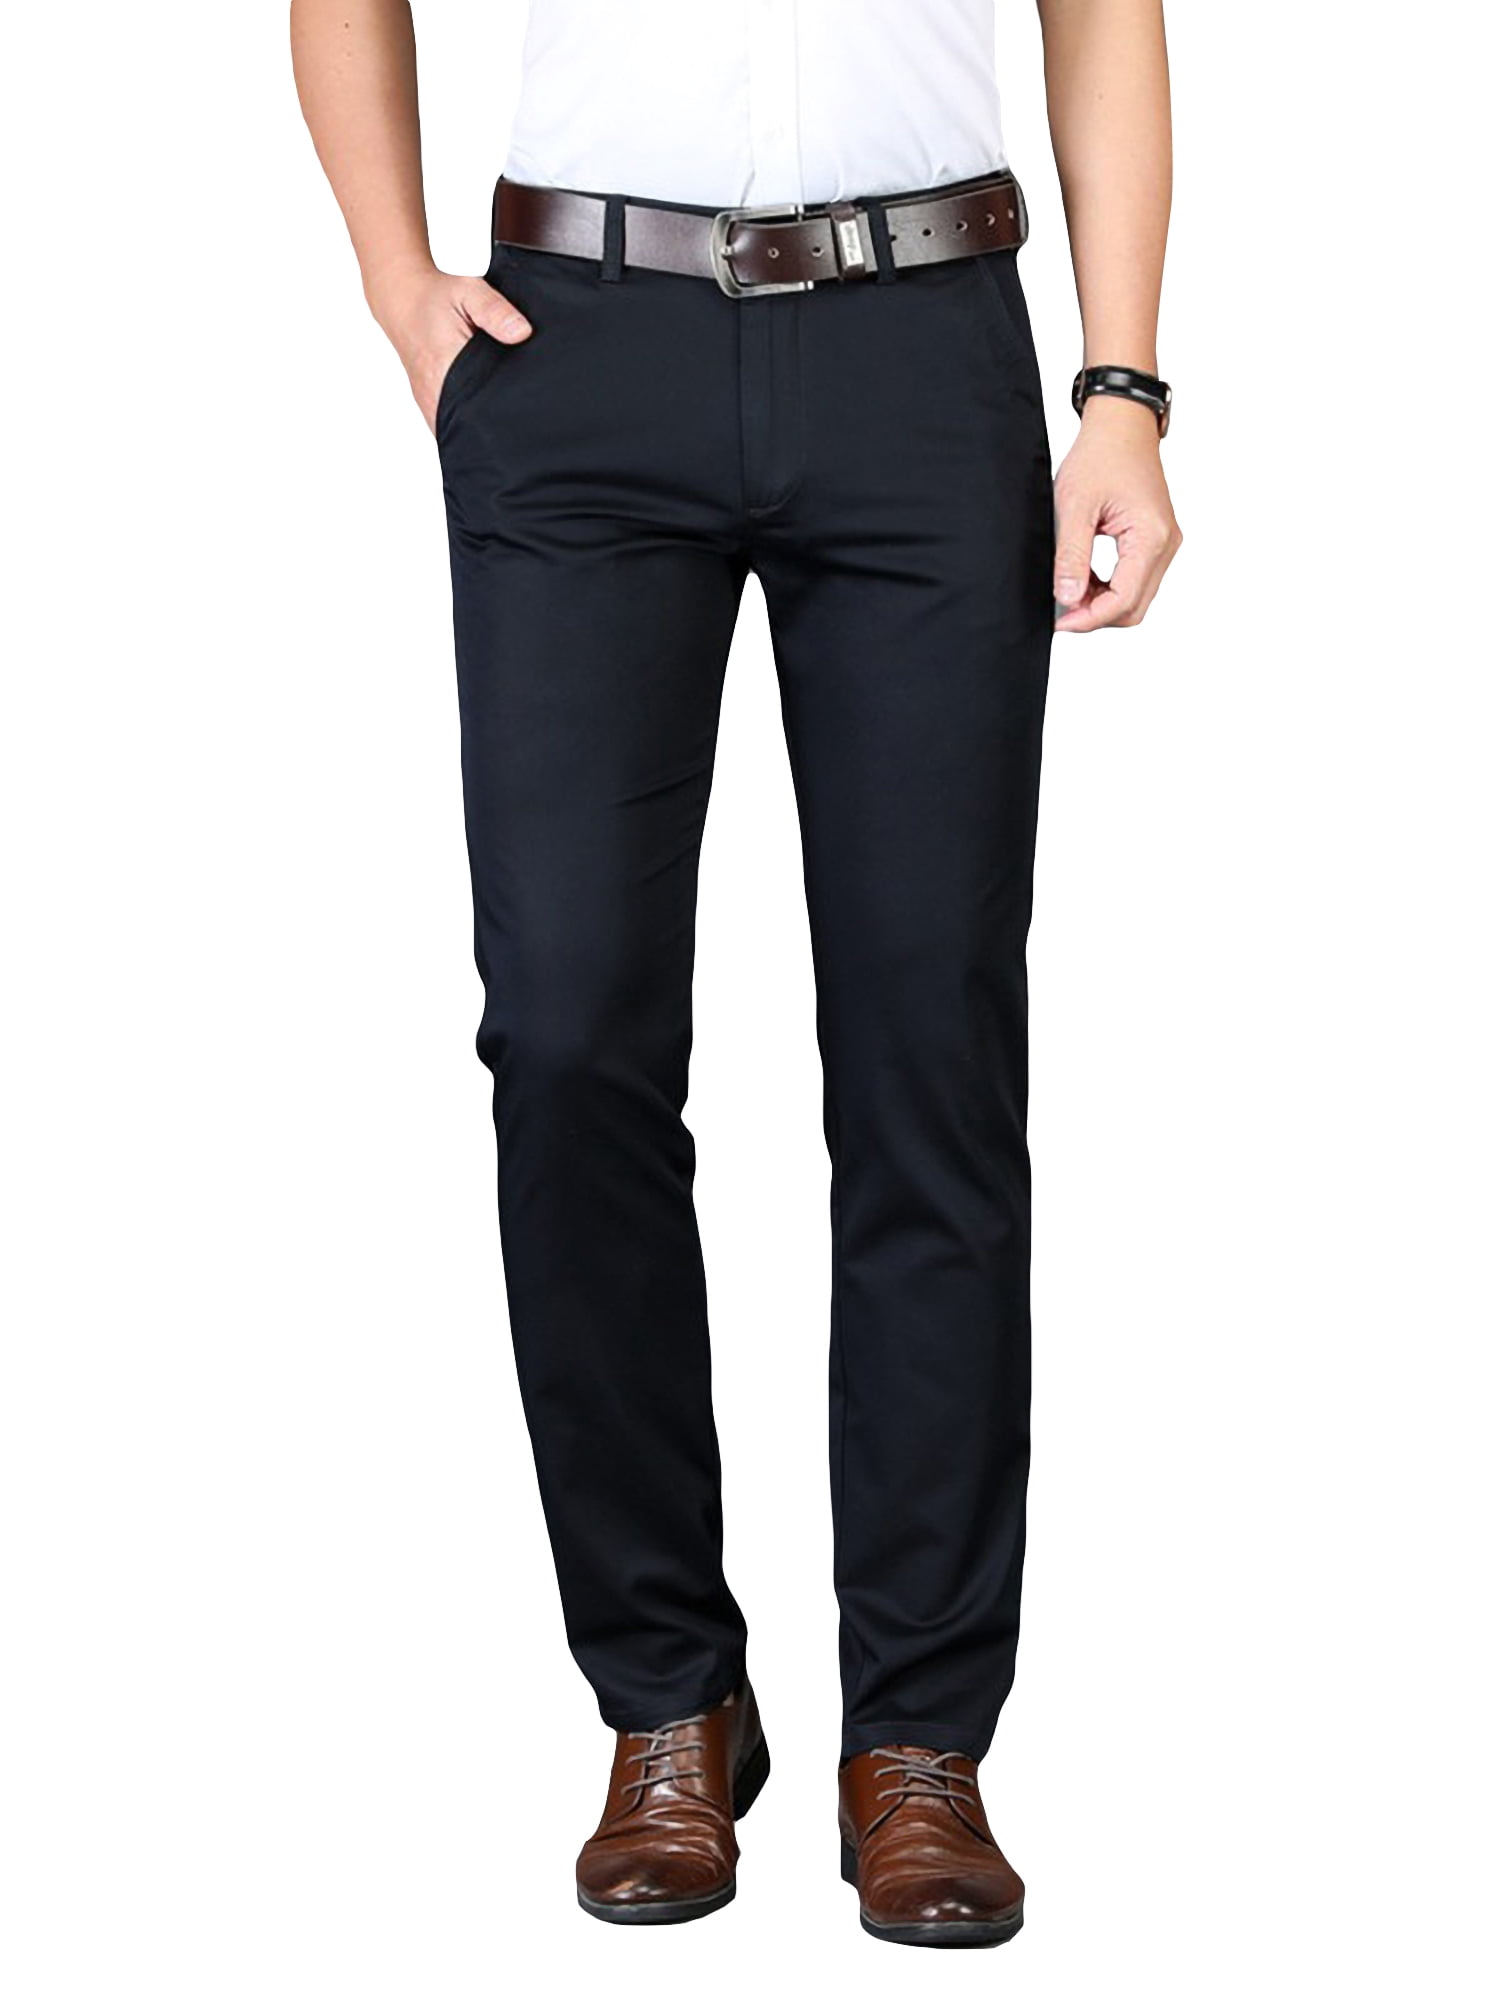 Men's Business Casual Slacks Straight Pants Work Wear Trousers Plain Slim Fit 